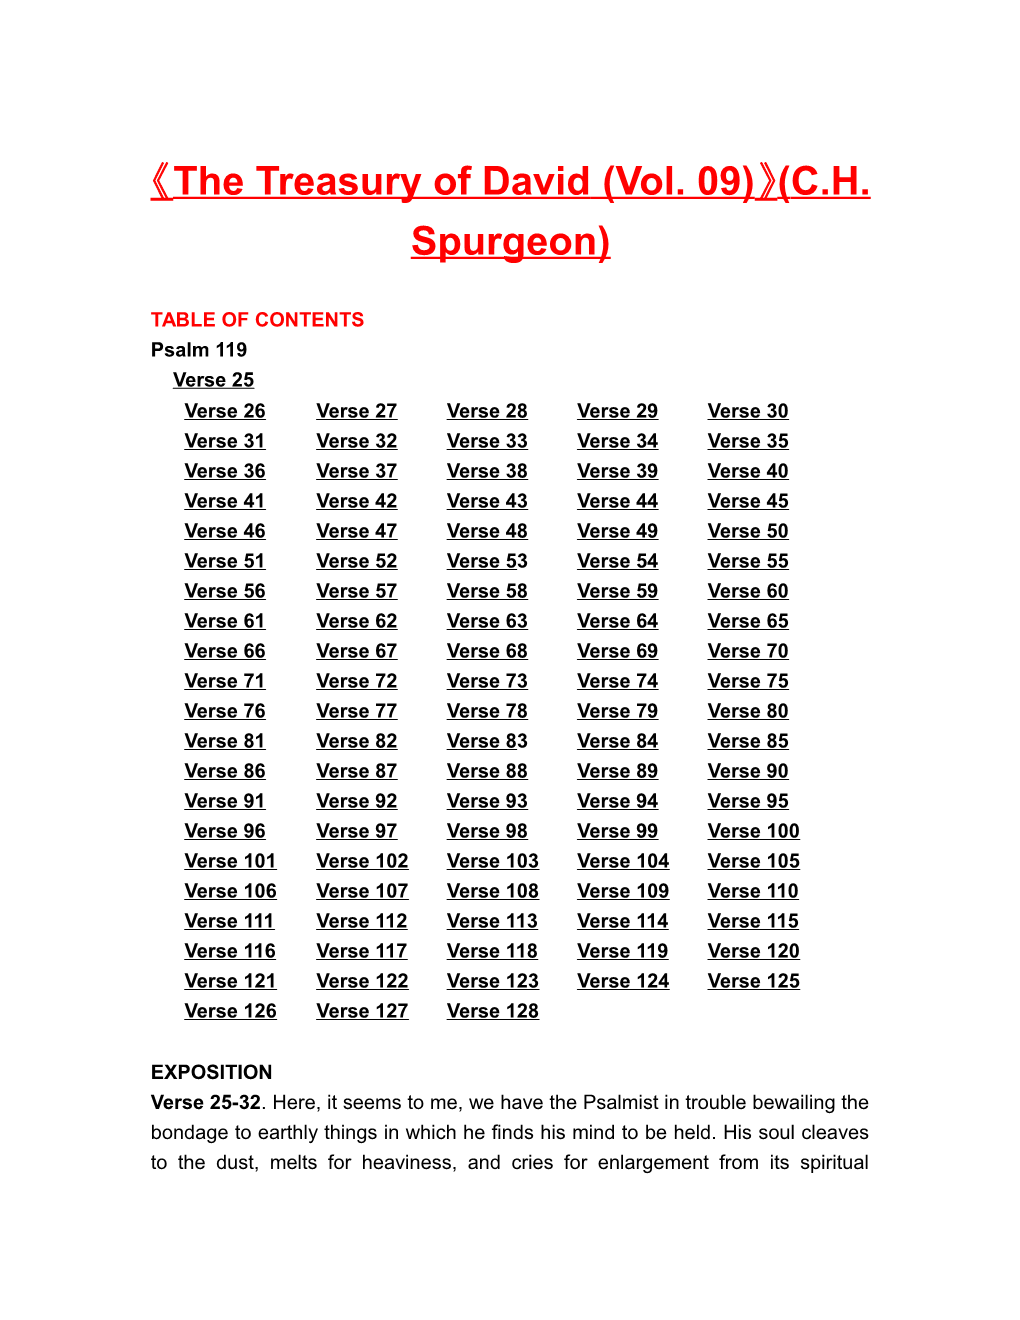 The Treasury of David (Vol. 09) (C.H. Spurgeon)